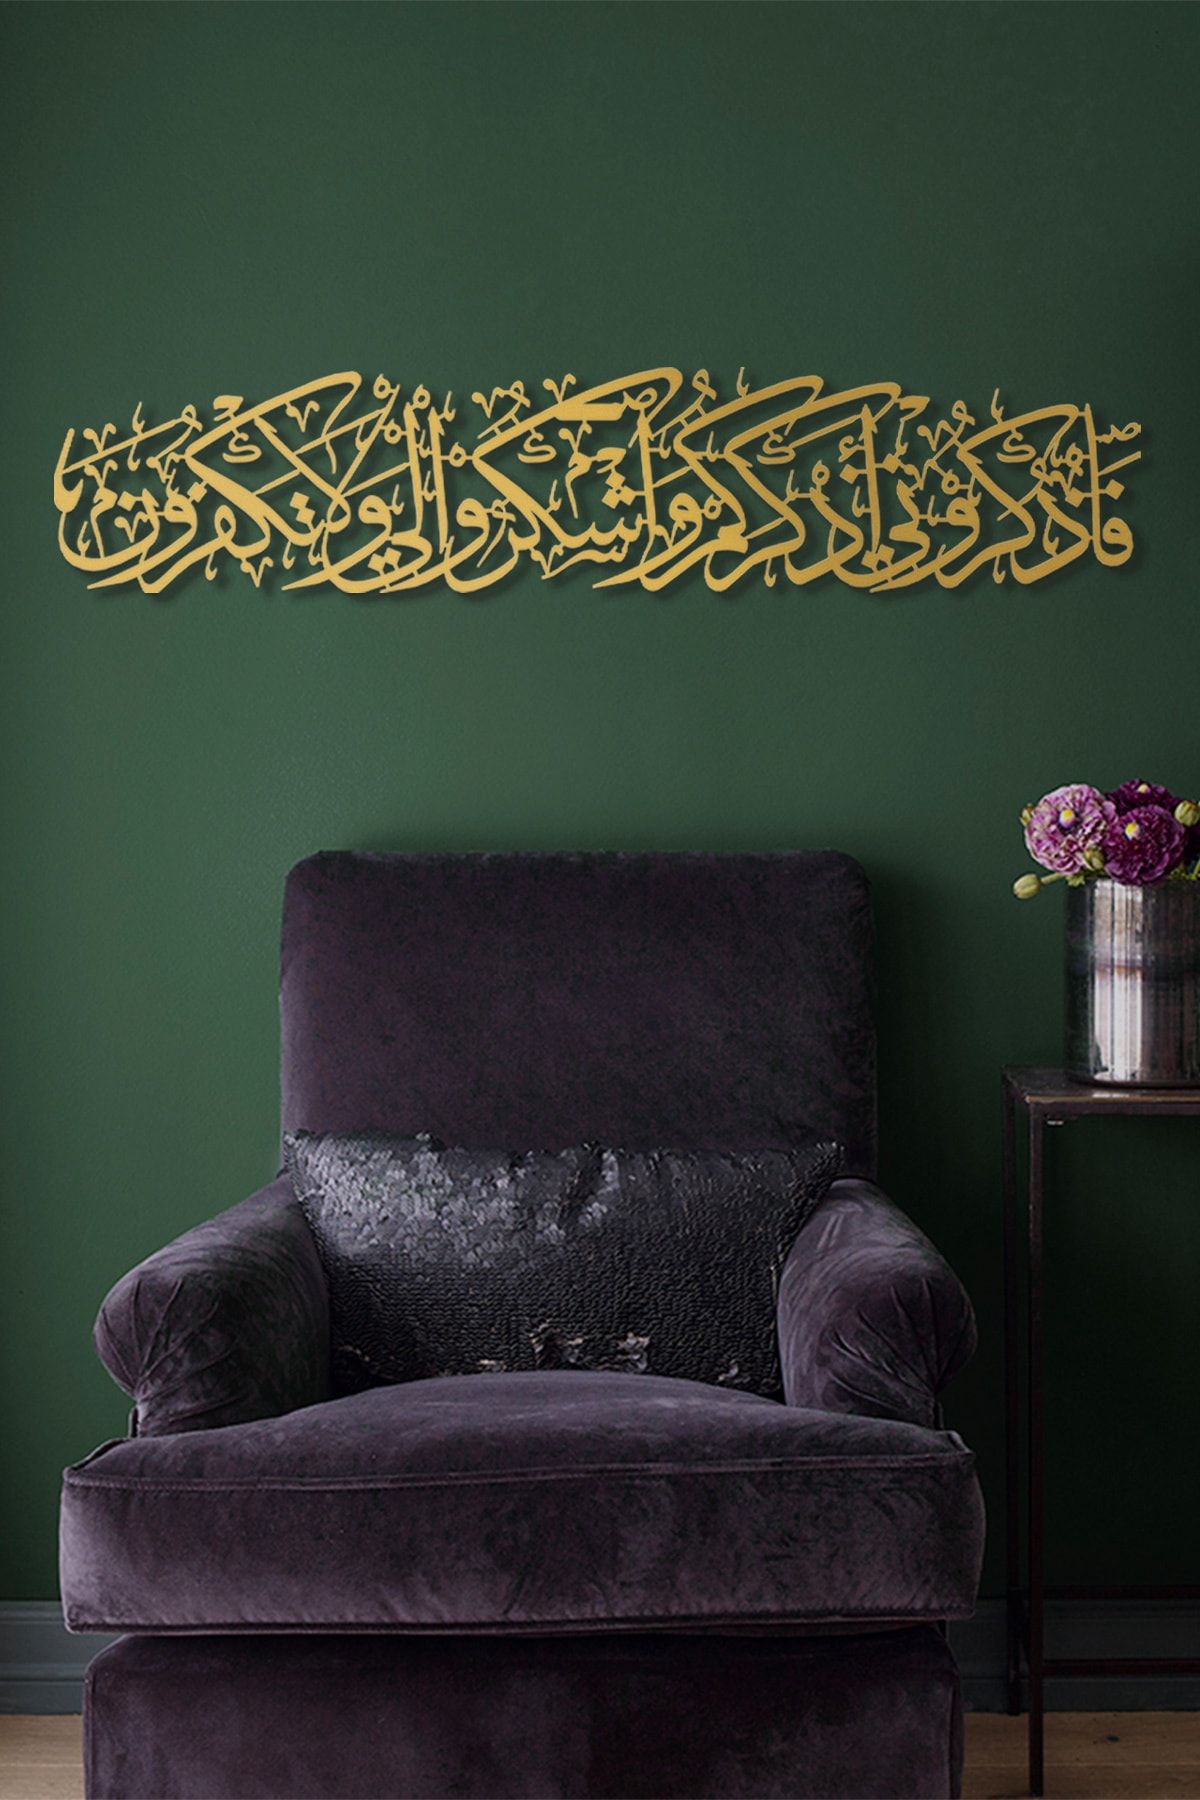 Wall Art İstanbul 69x16 Cm - Metal Şükür Duası Yazılı Islami Duvar Tablosu - Altın Dini Tablo - Dini Tablolar - Wam165